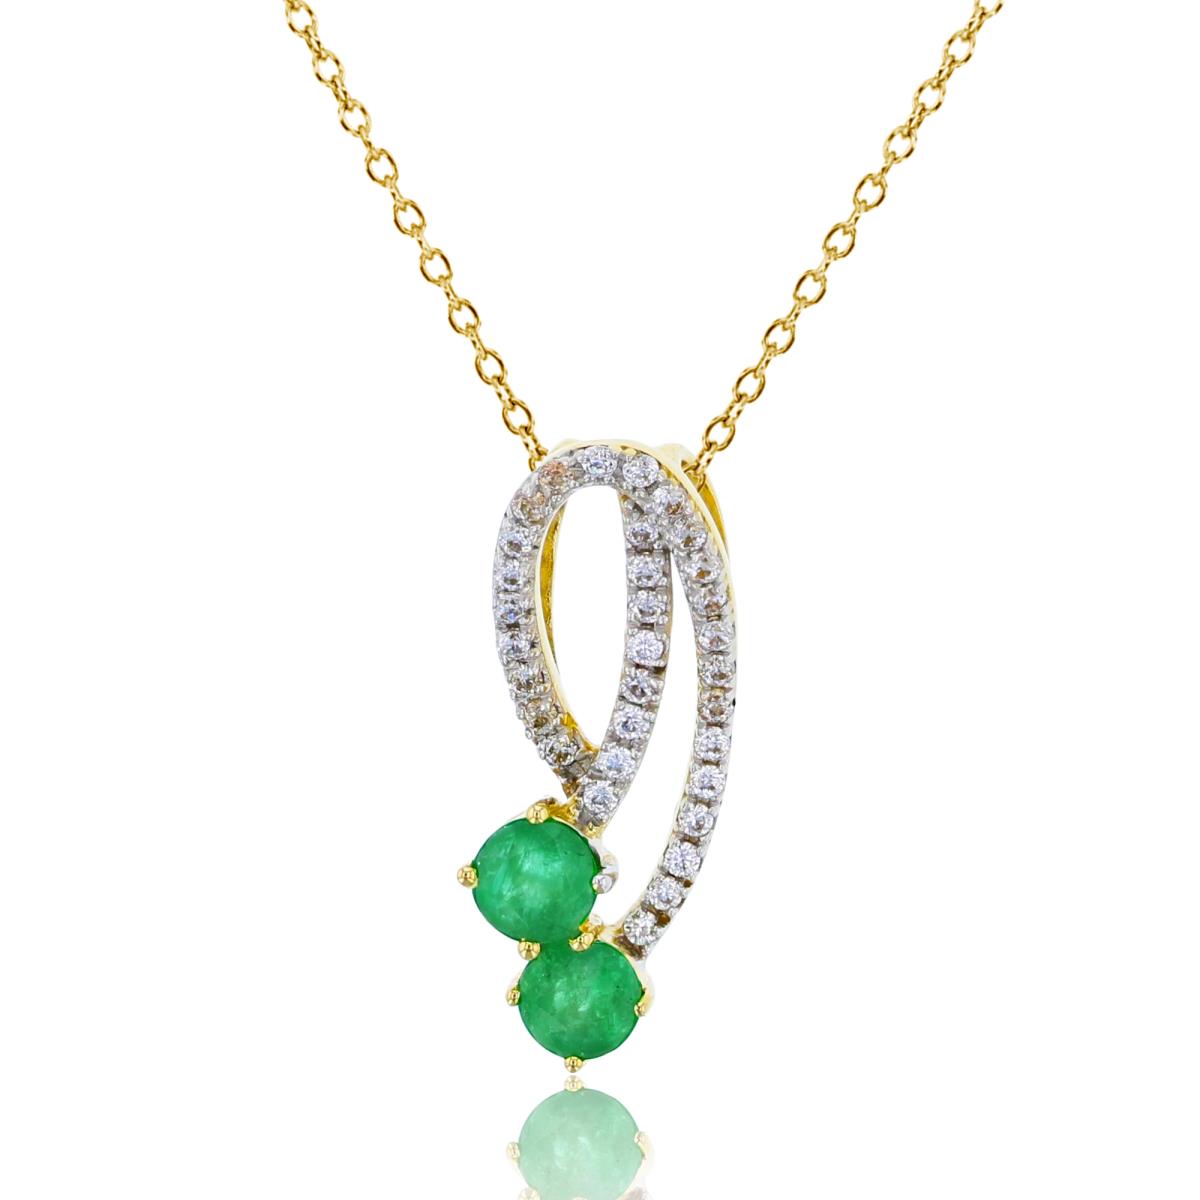 14K Yellow Gold 0.16cttw Rnd Diamonds & 3.5mm Rnd Emerald Fashion 18"Necklace